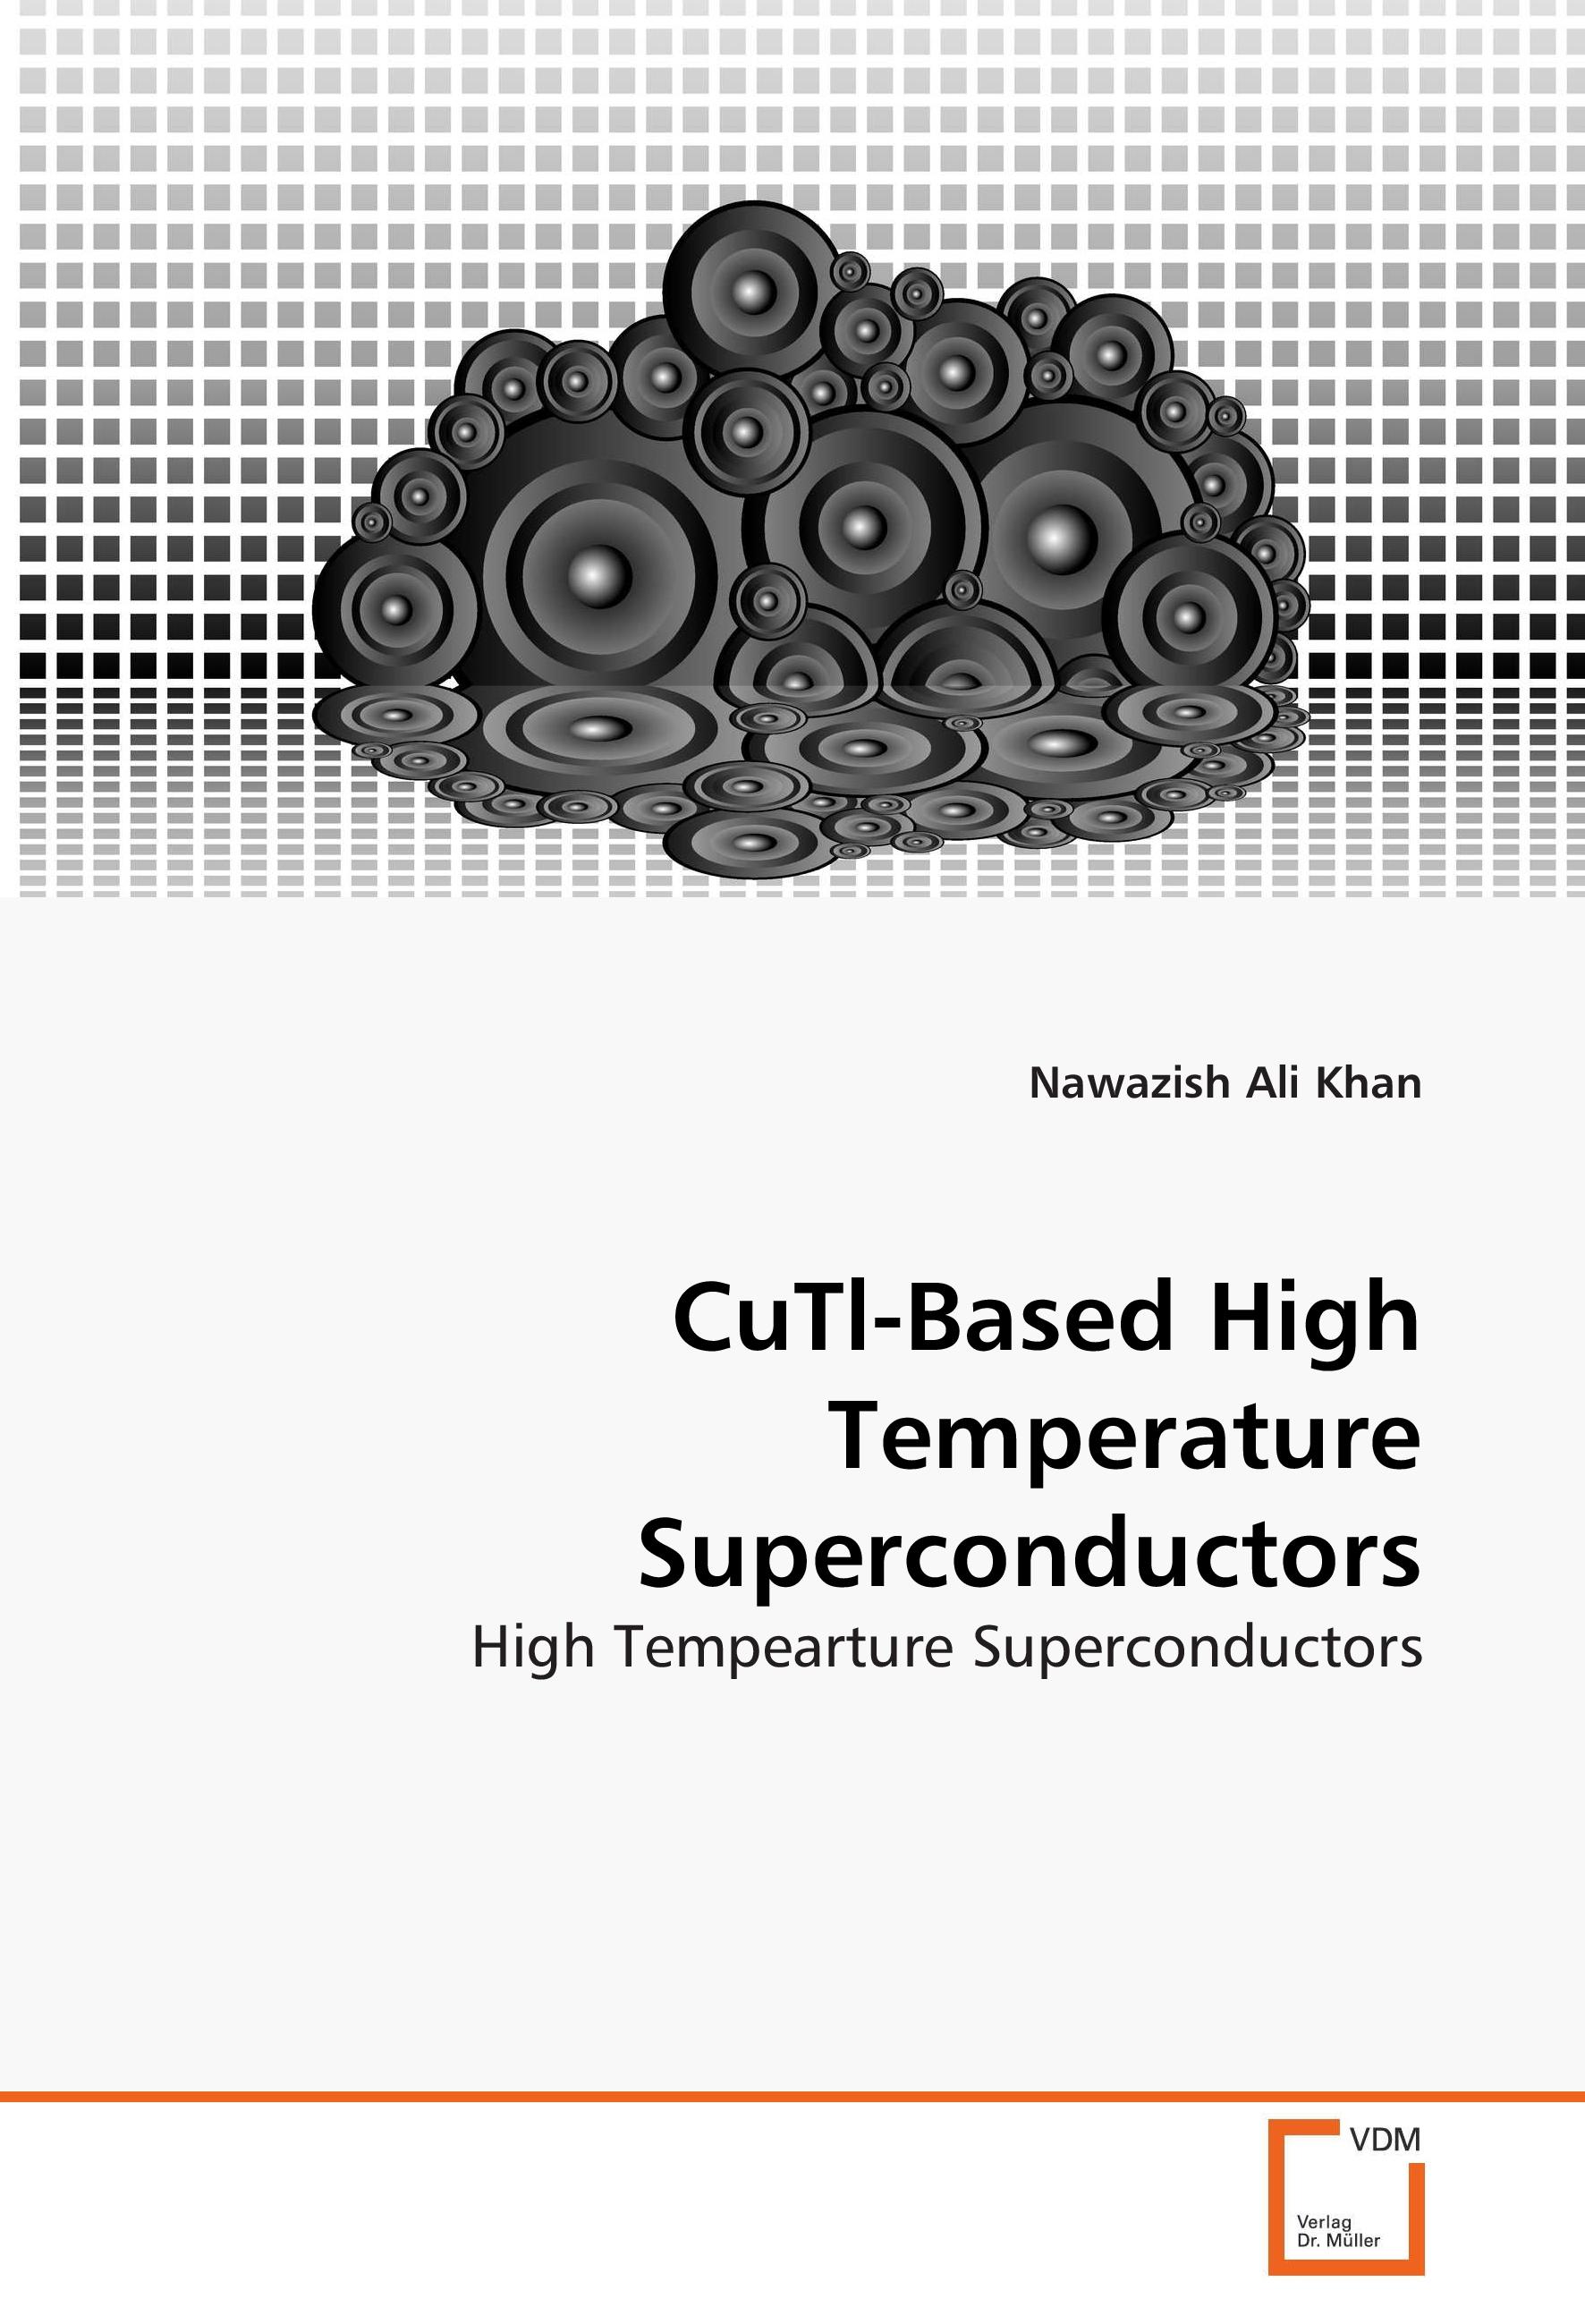 CuTl-Based High Temperature Superconductors / High Tempearture Superconductors / Nawazish Ali Khan / Taschenbuch / Paperback / 328 S. / Englisch / 2013 / VDM Verlag Dr. Müller e.K. / EAN 9783639268447 - Khan, Nawazish Ali